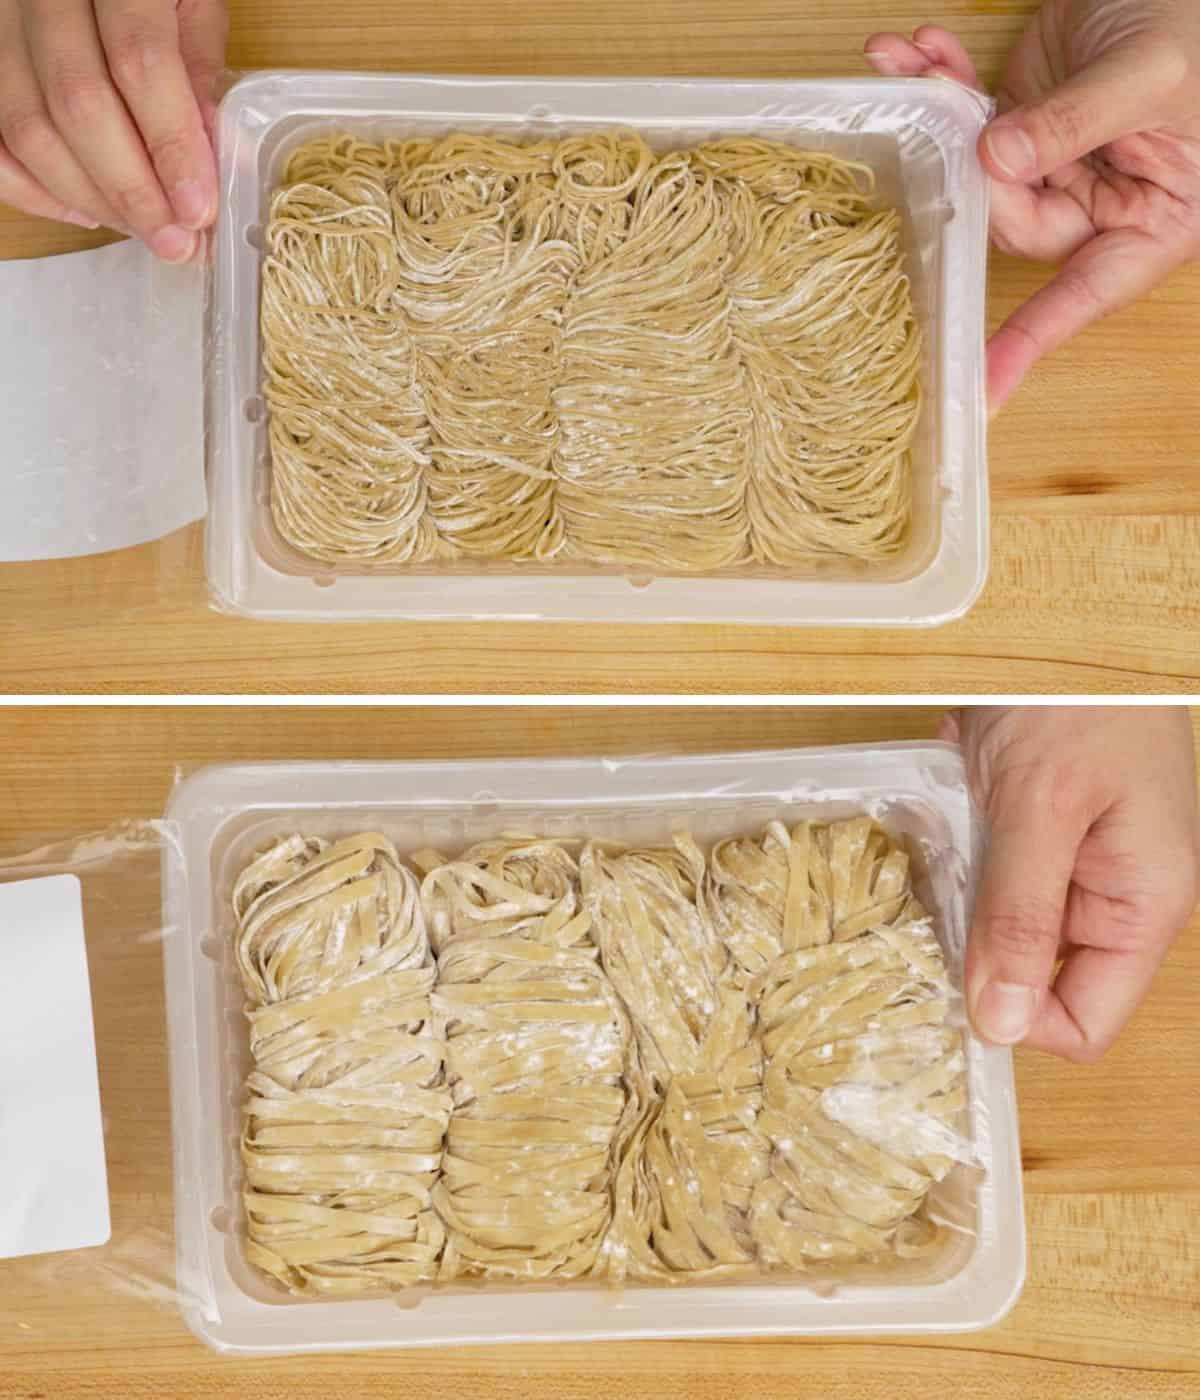 Small wonton noodles vs flat wonton noodles